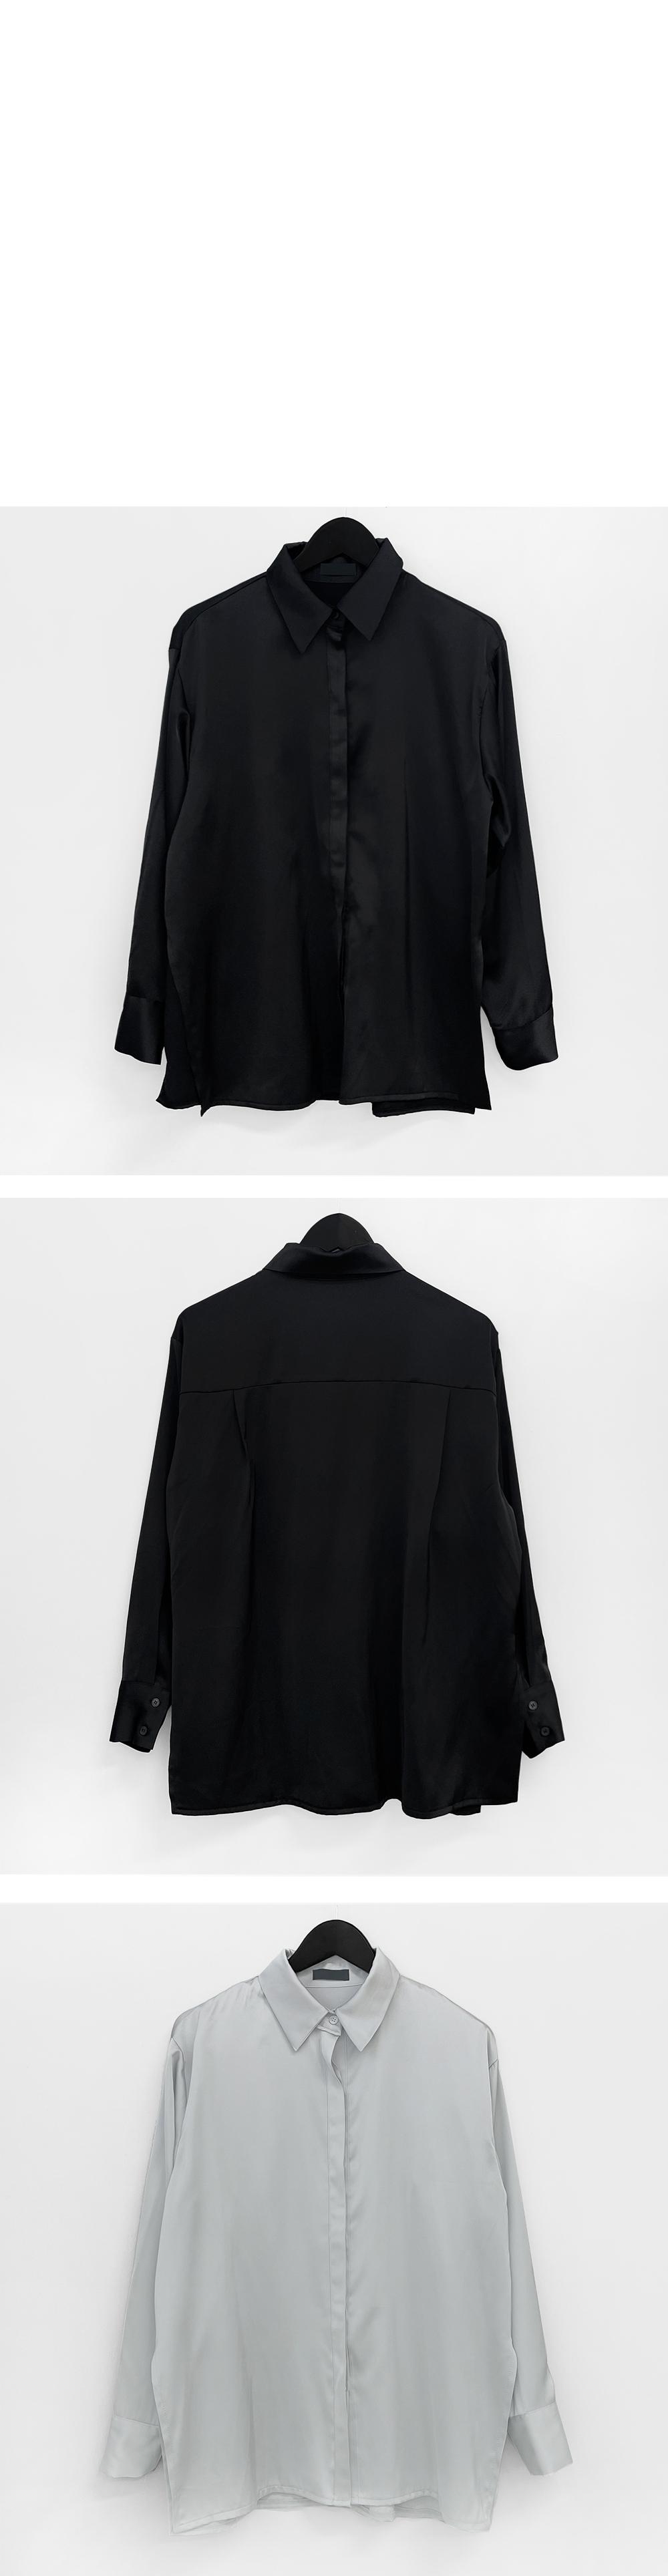 Jacket charcoal color image-S1L10